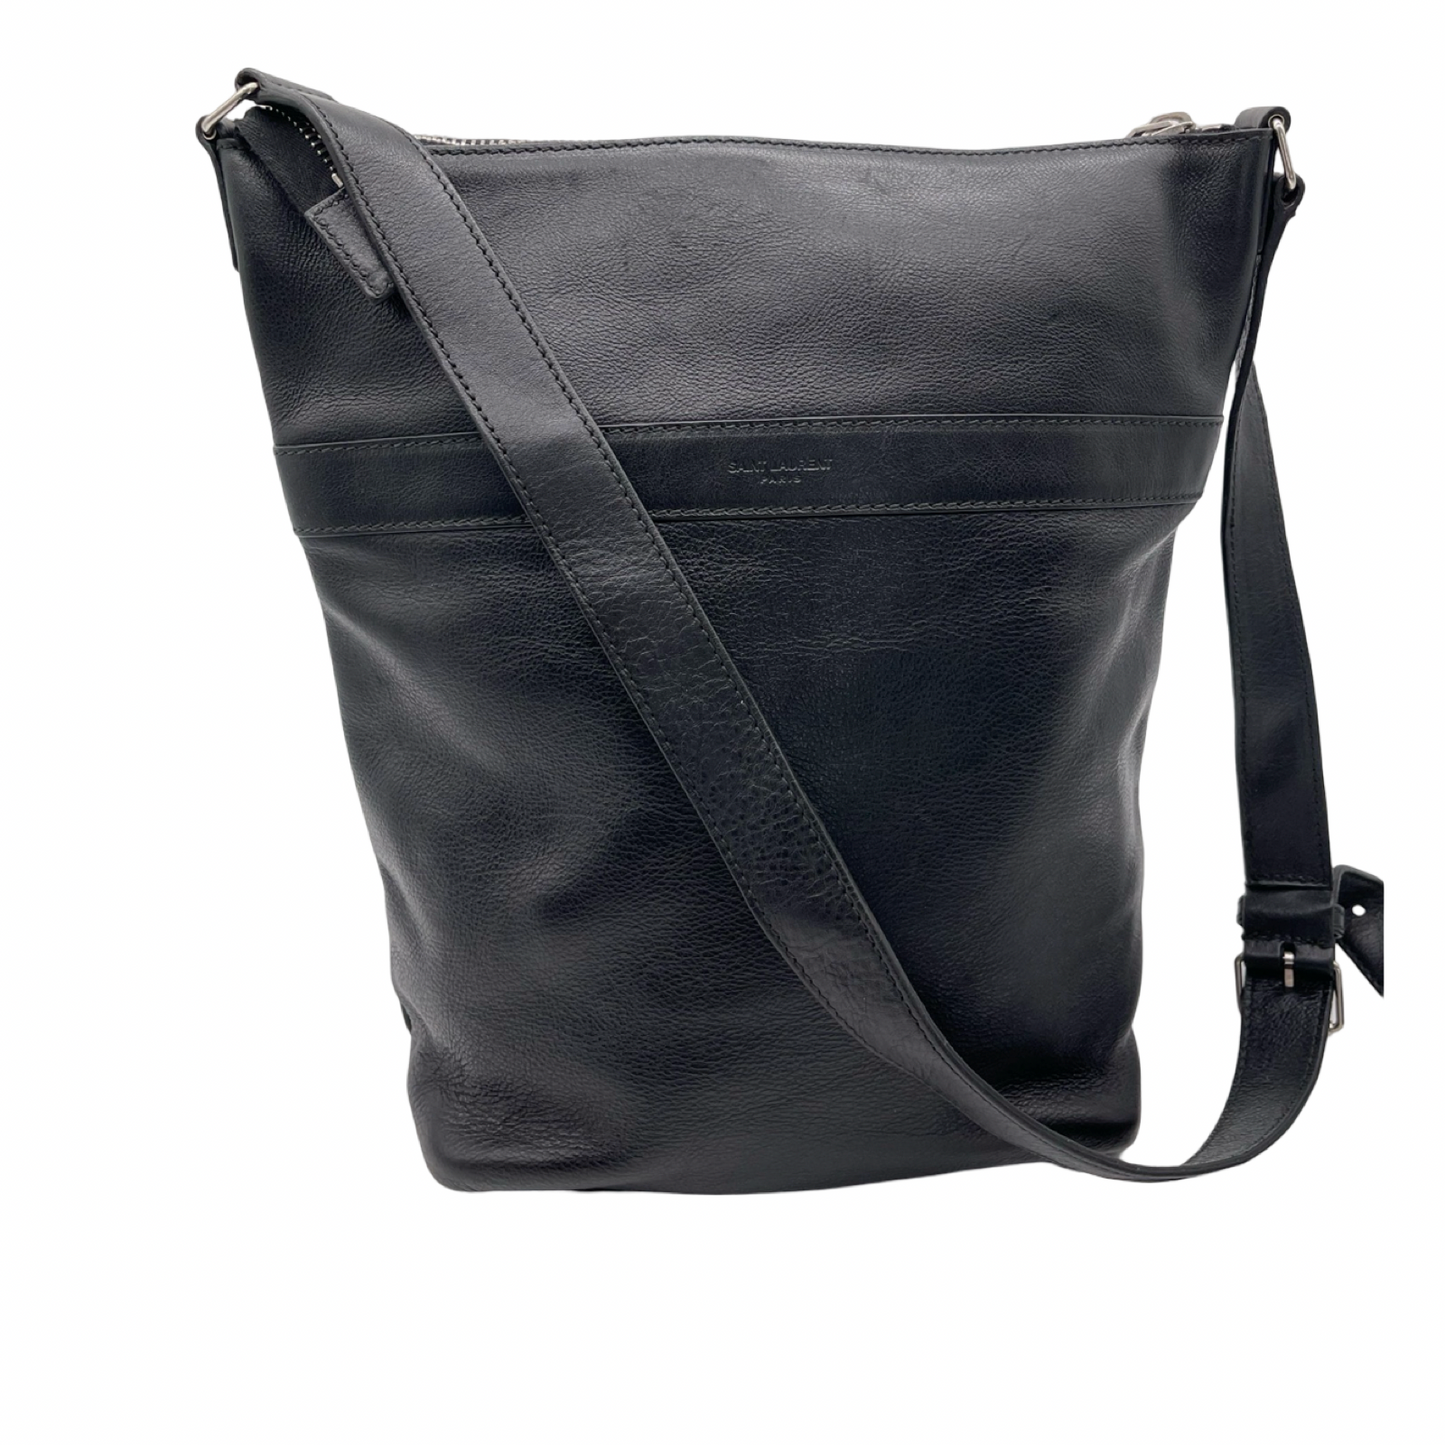 Saint Laurent crossbody leather bag